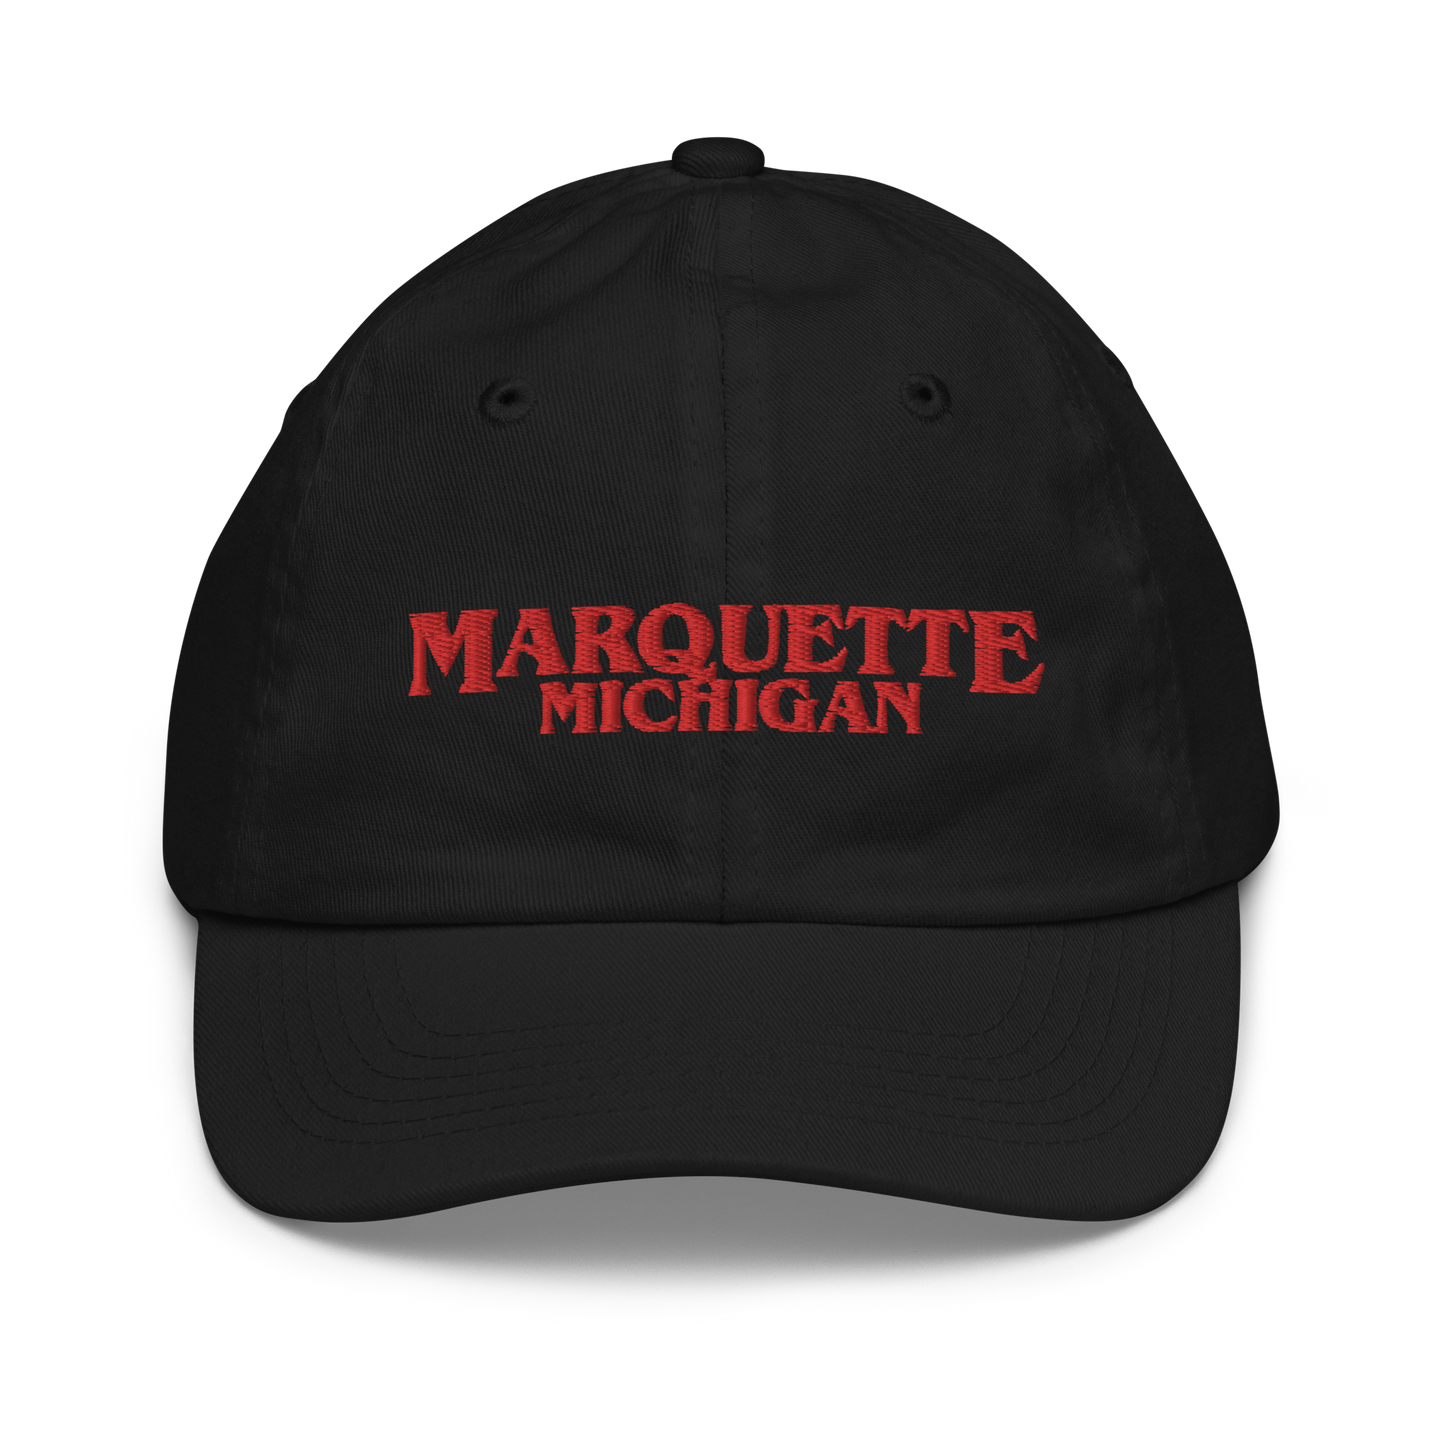 'Marquette Michigan' Youth Baseball Cap (1980s Drama Parody)